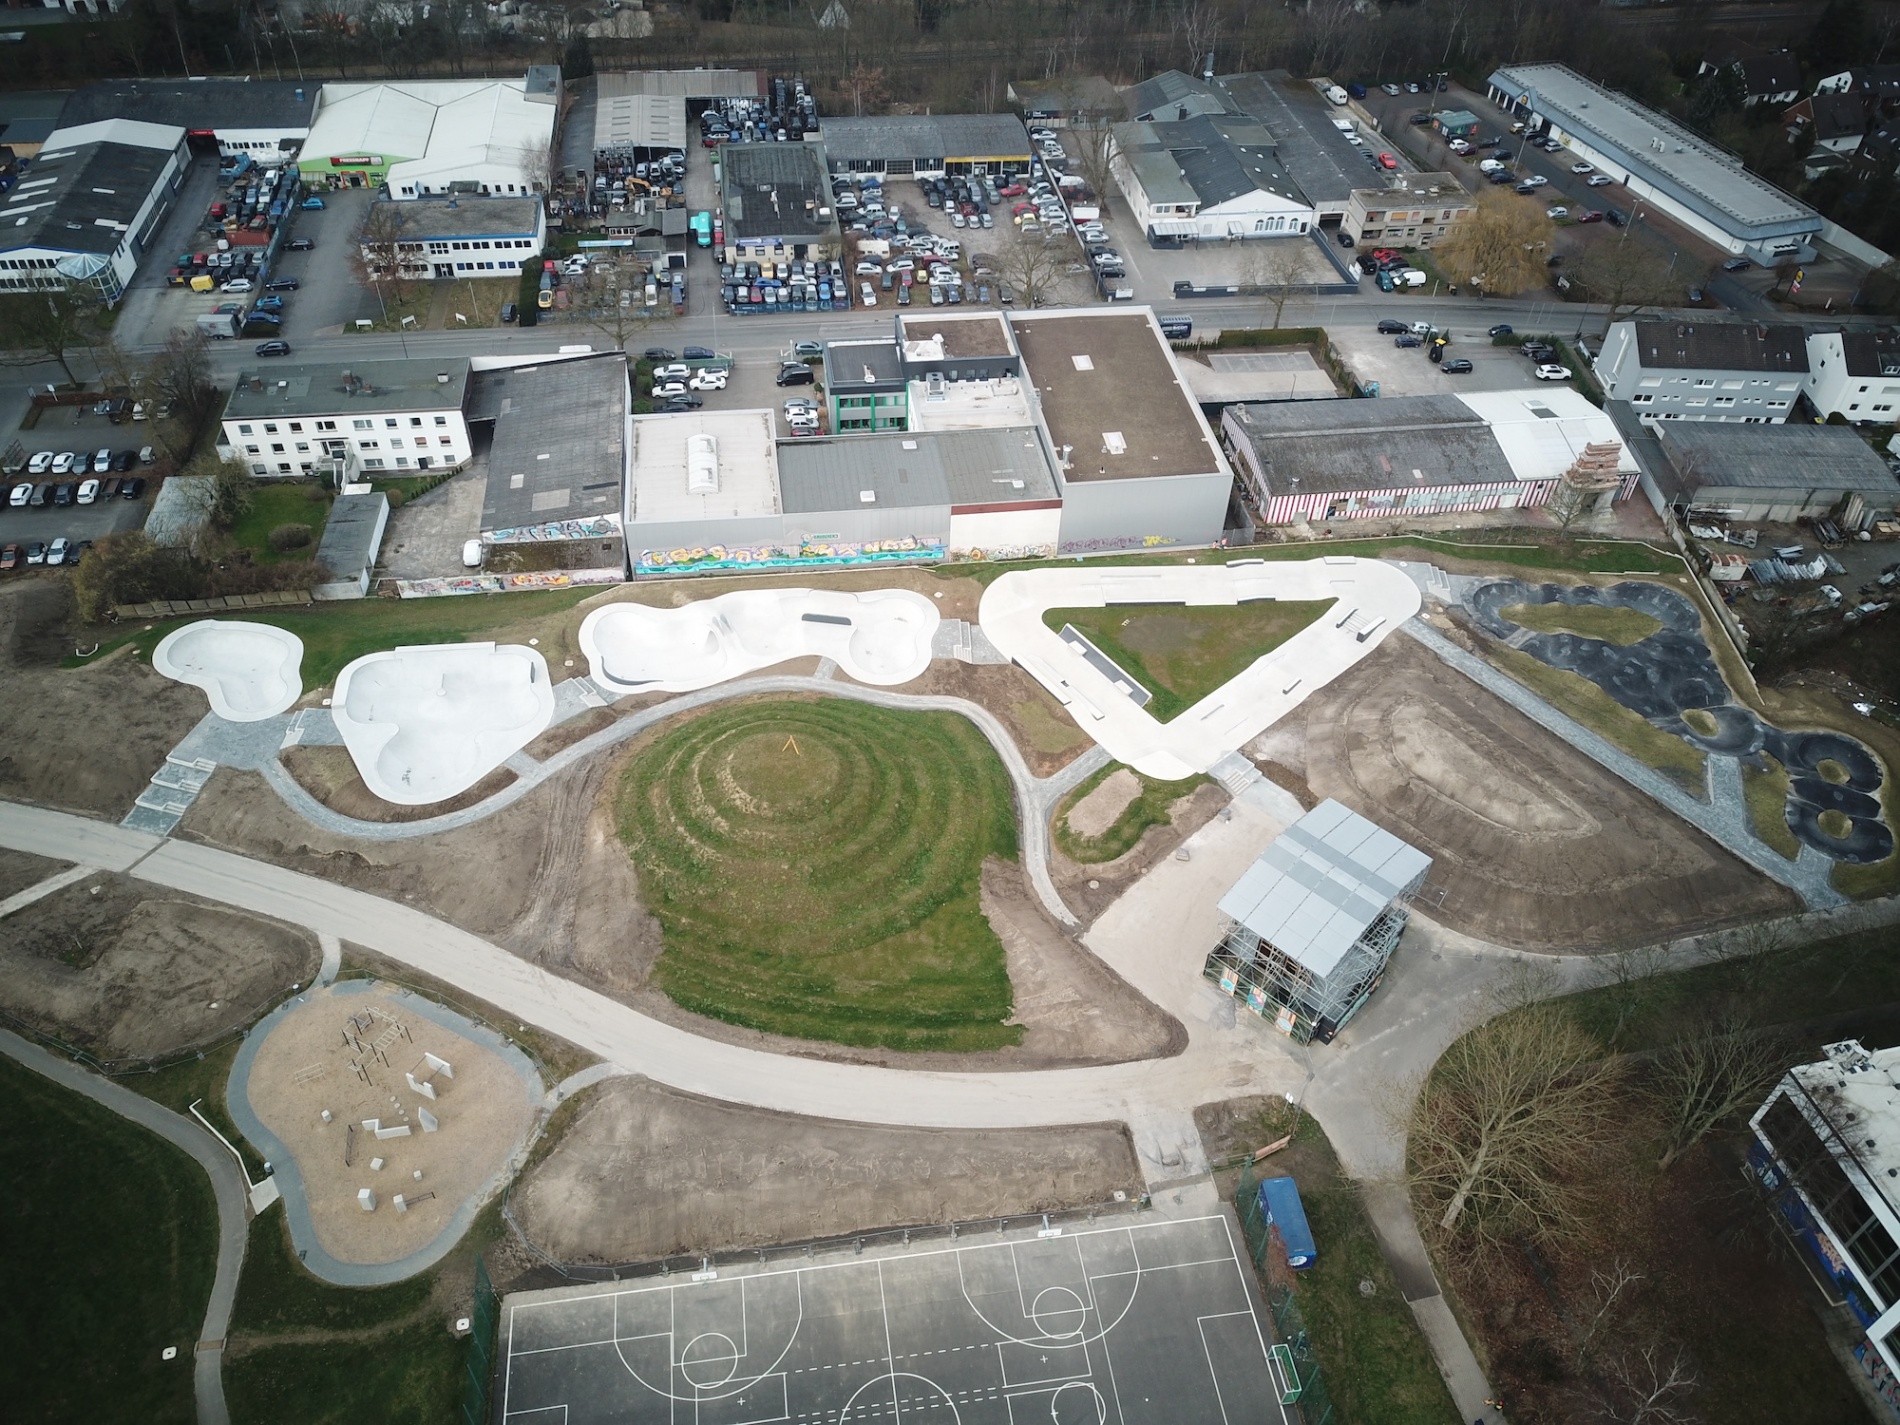 The new Hombruch skatepark in Dortmund is officially open